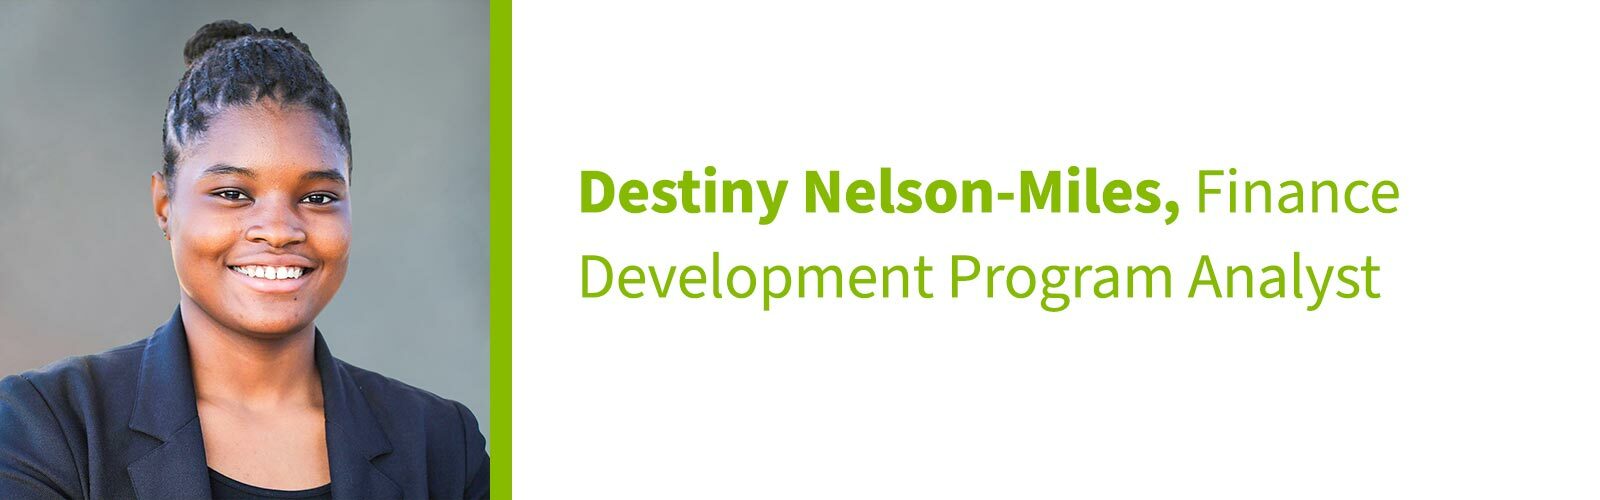 Destiny Nelson-Miles